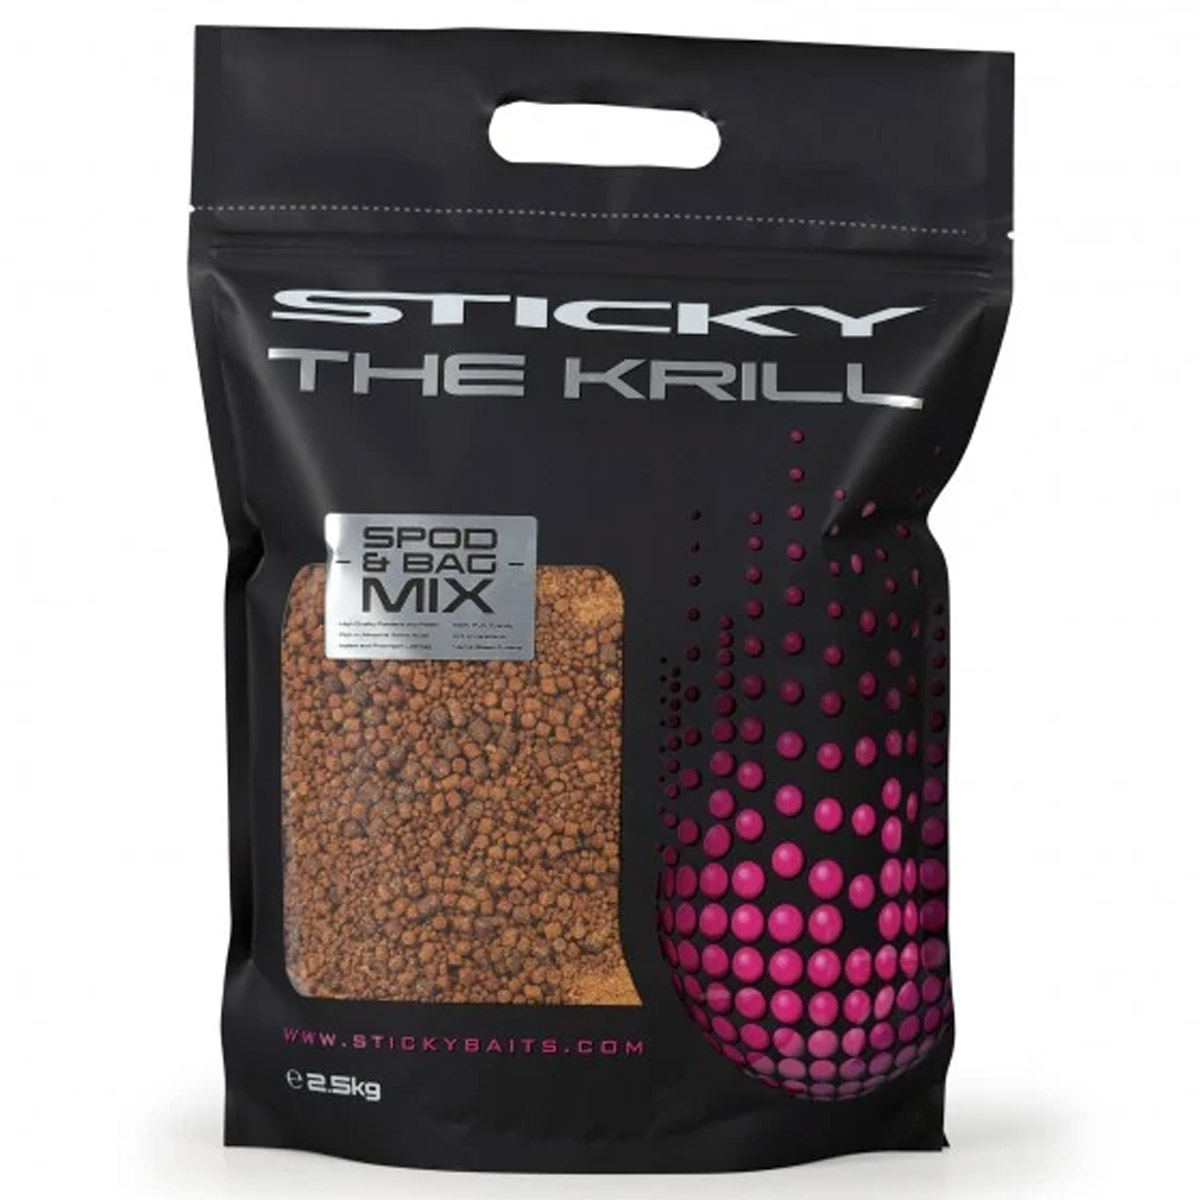 Sticky Baits The Krill Spod & Bag Mix 2,5 Kilo